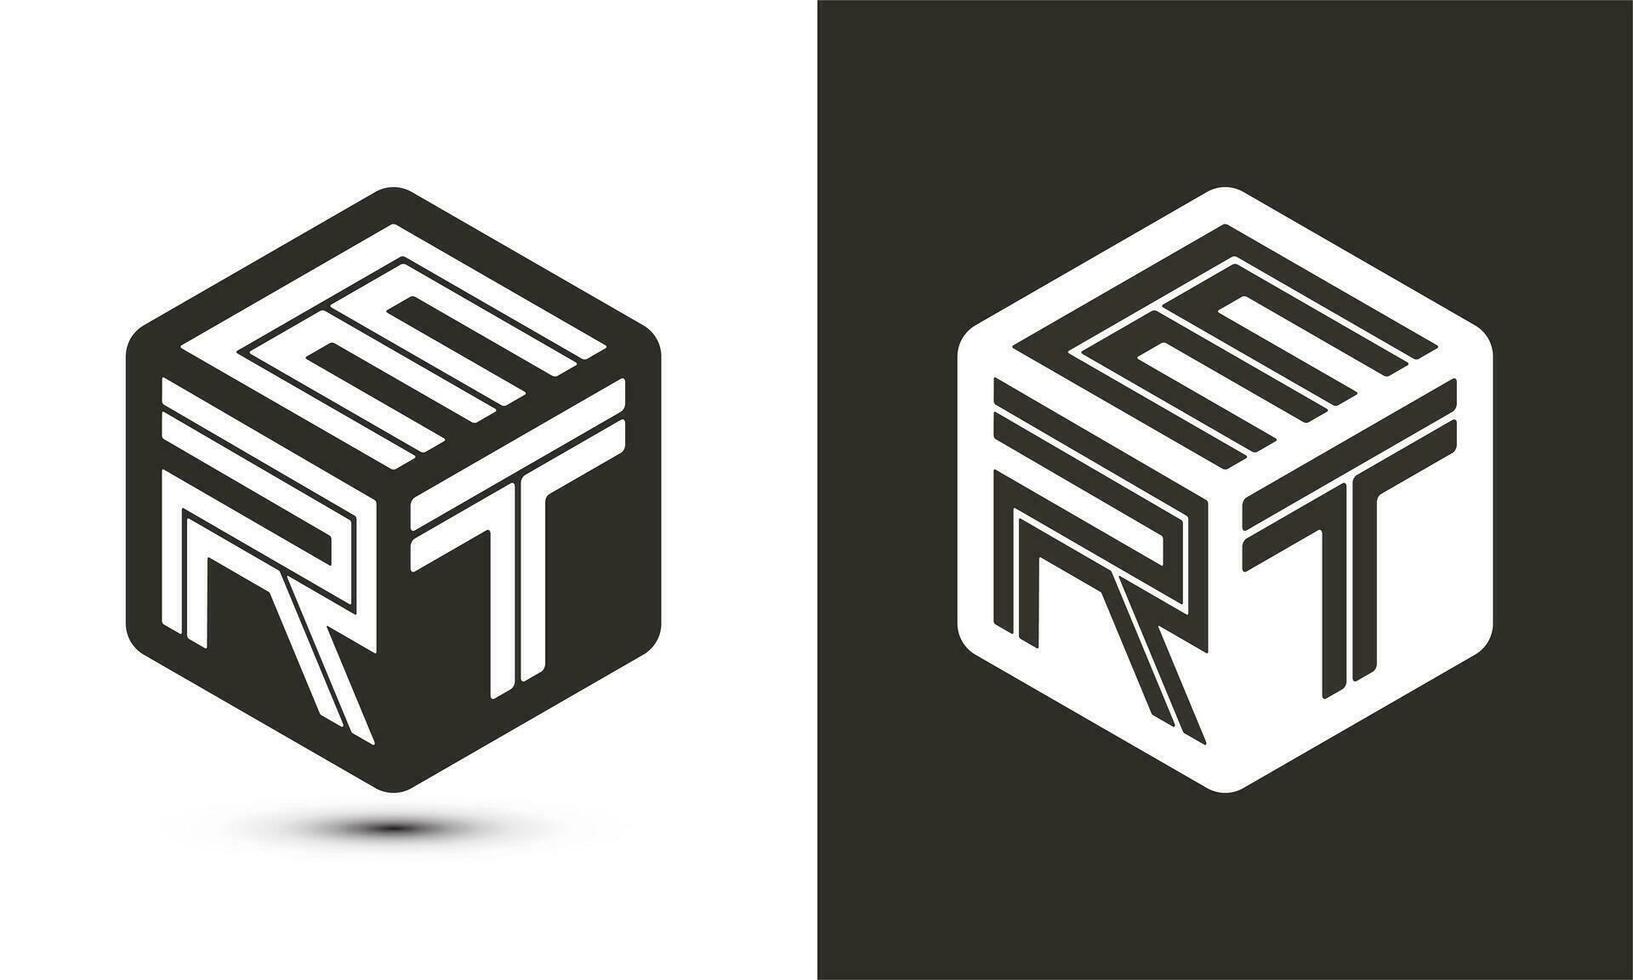 ert letra logo diseño con ilustrador cubo logo, vector logo moderno alfabeto fuente superposición estilo.